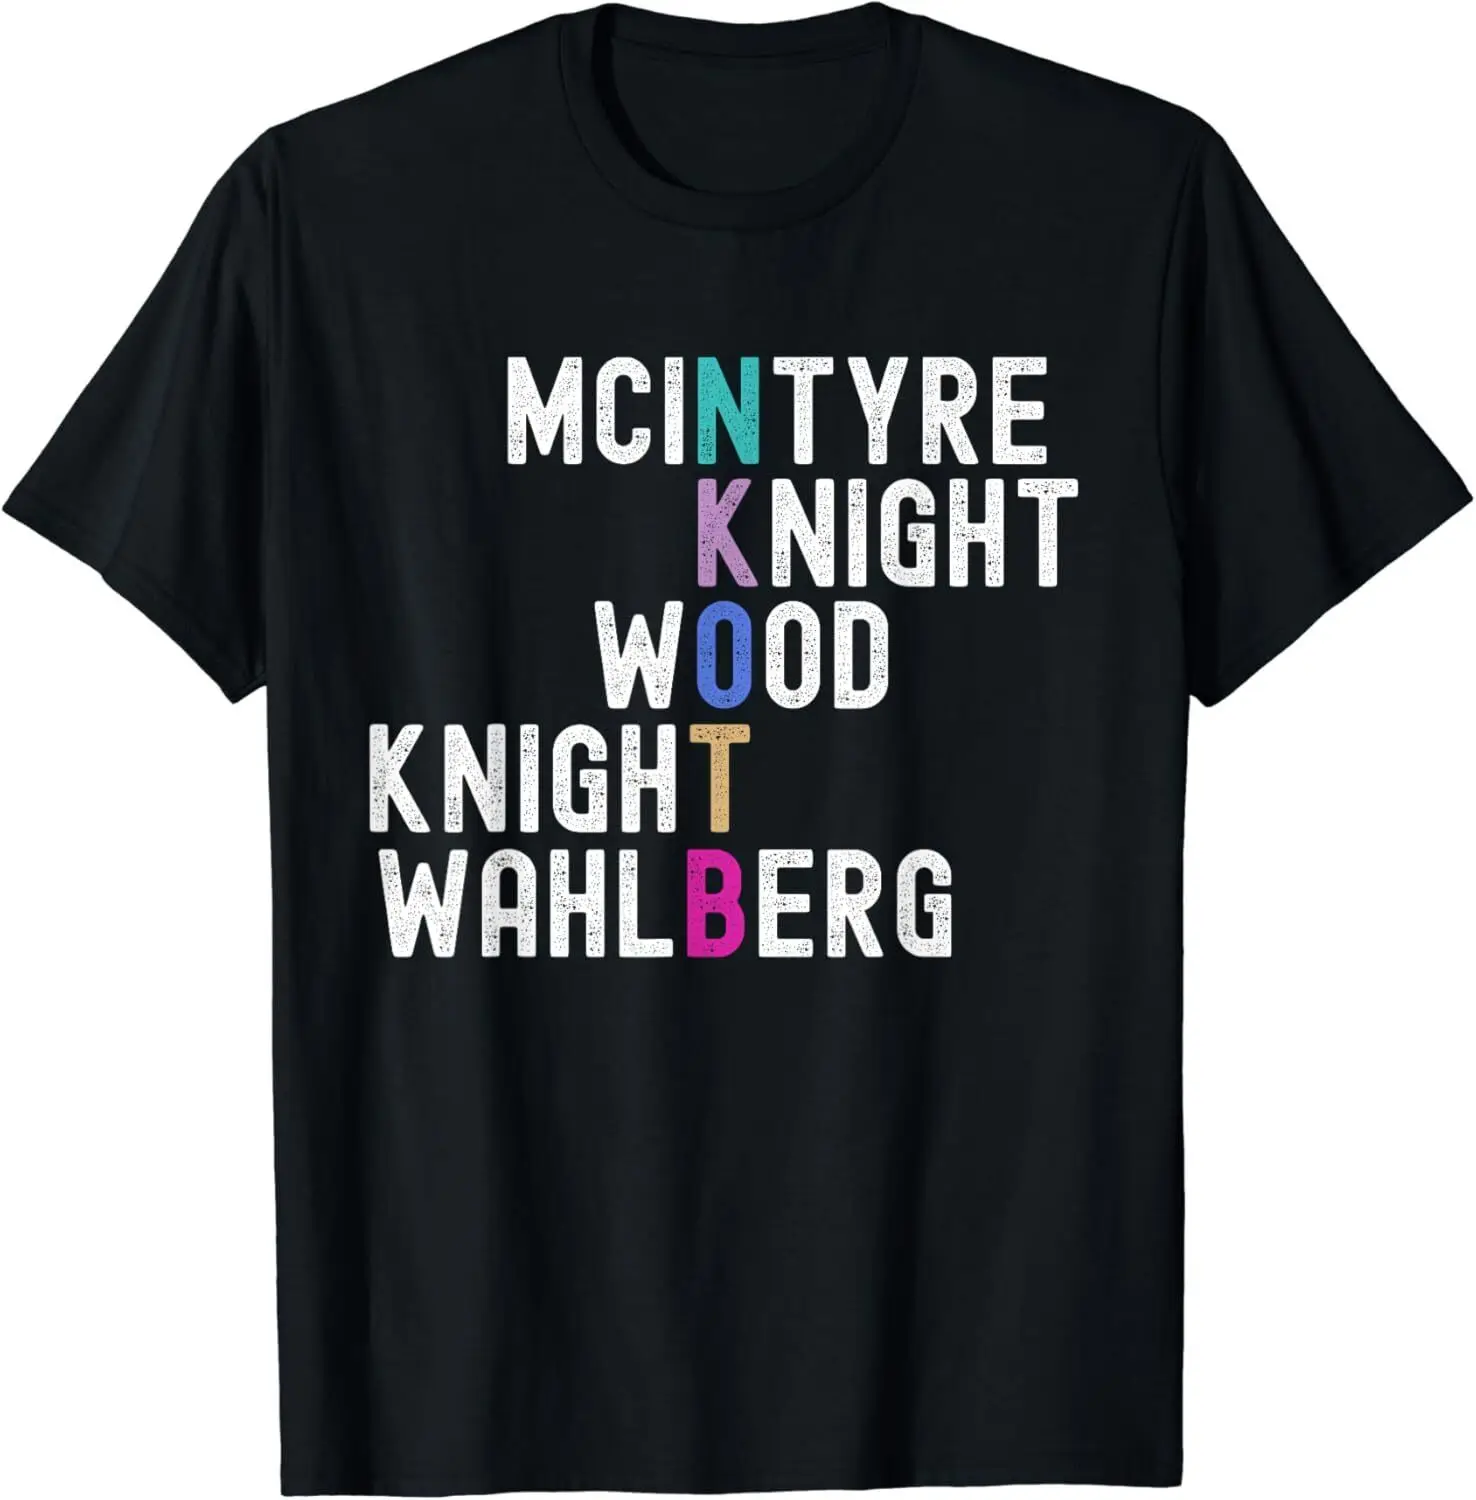 

Футболка Mcintyre Knight Wood Knight Wahlberg, забавный подарок, футболка унисекс